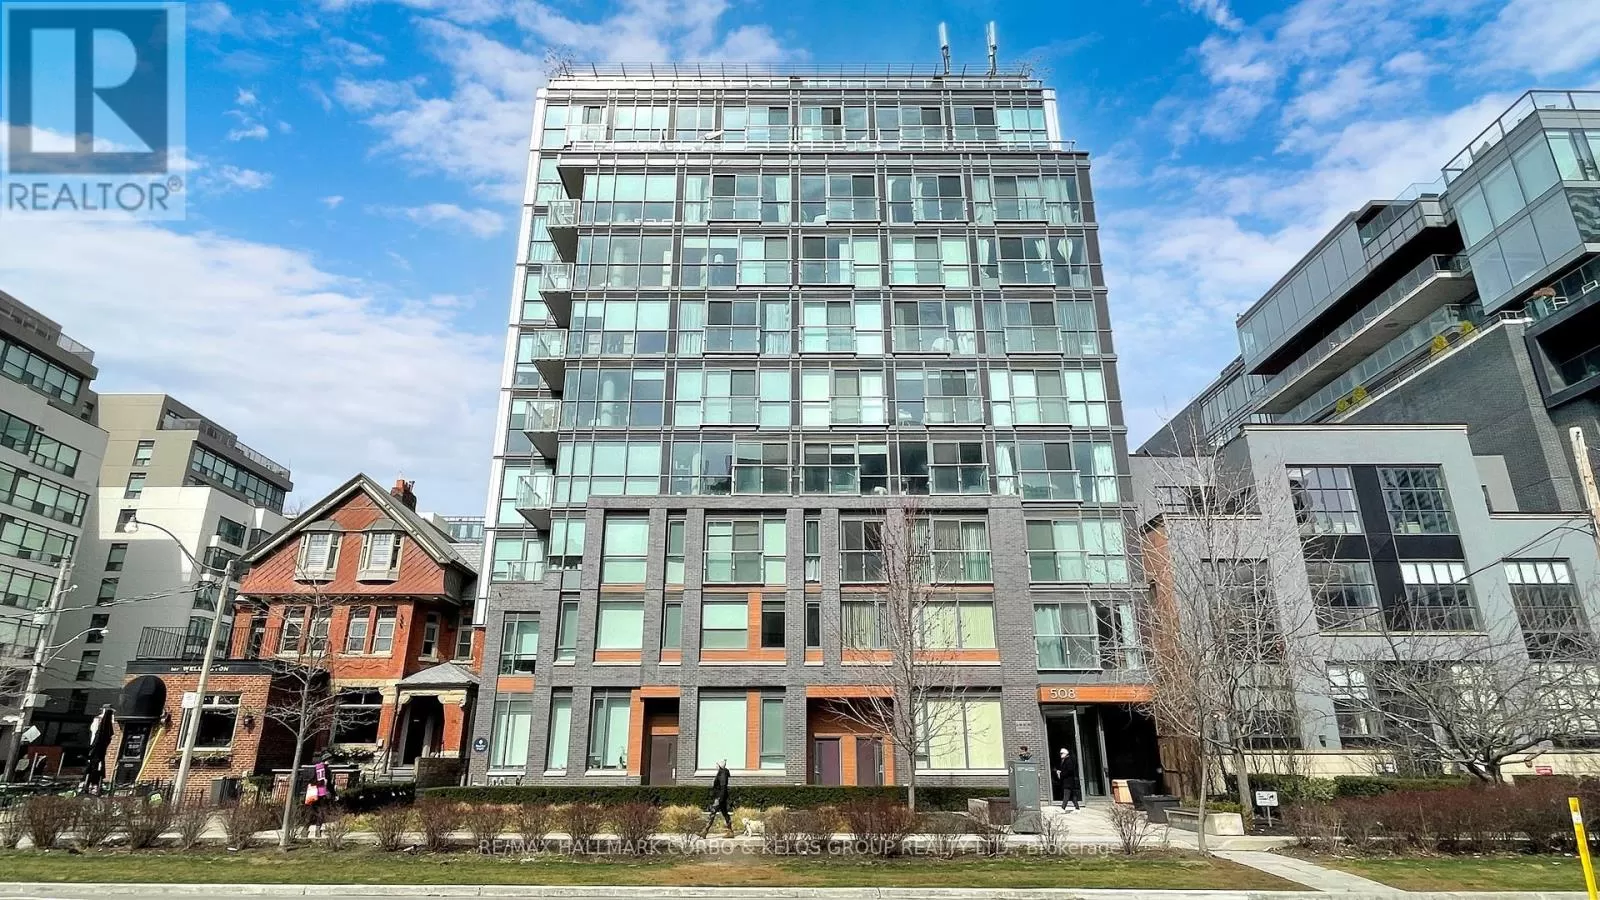 Apartment for rent: 606 - 508 Wellington Street W, Toronto, Ontario M5V 0K8